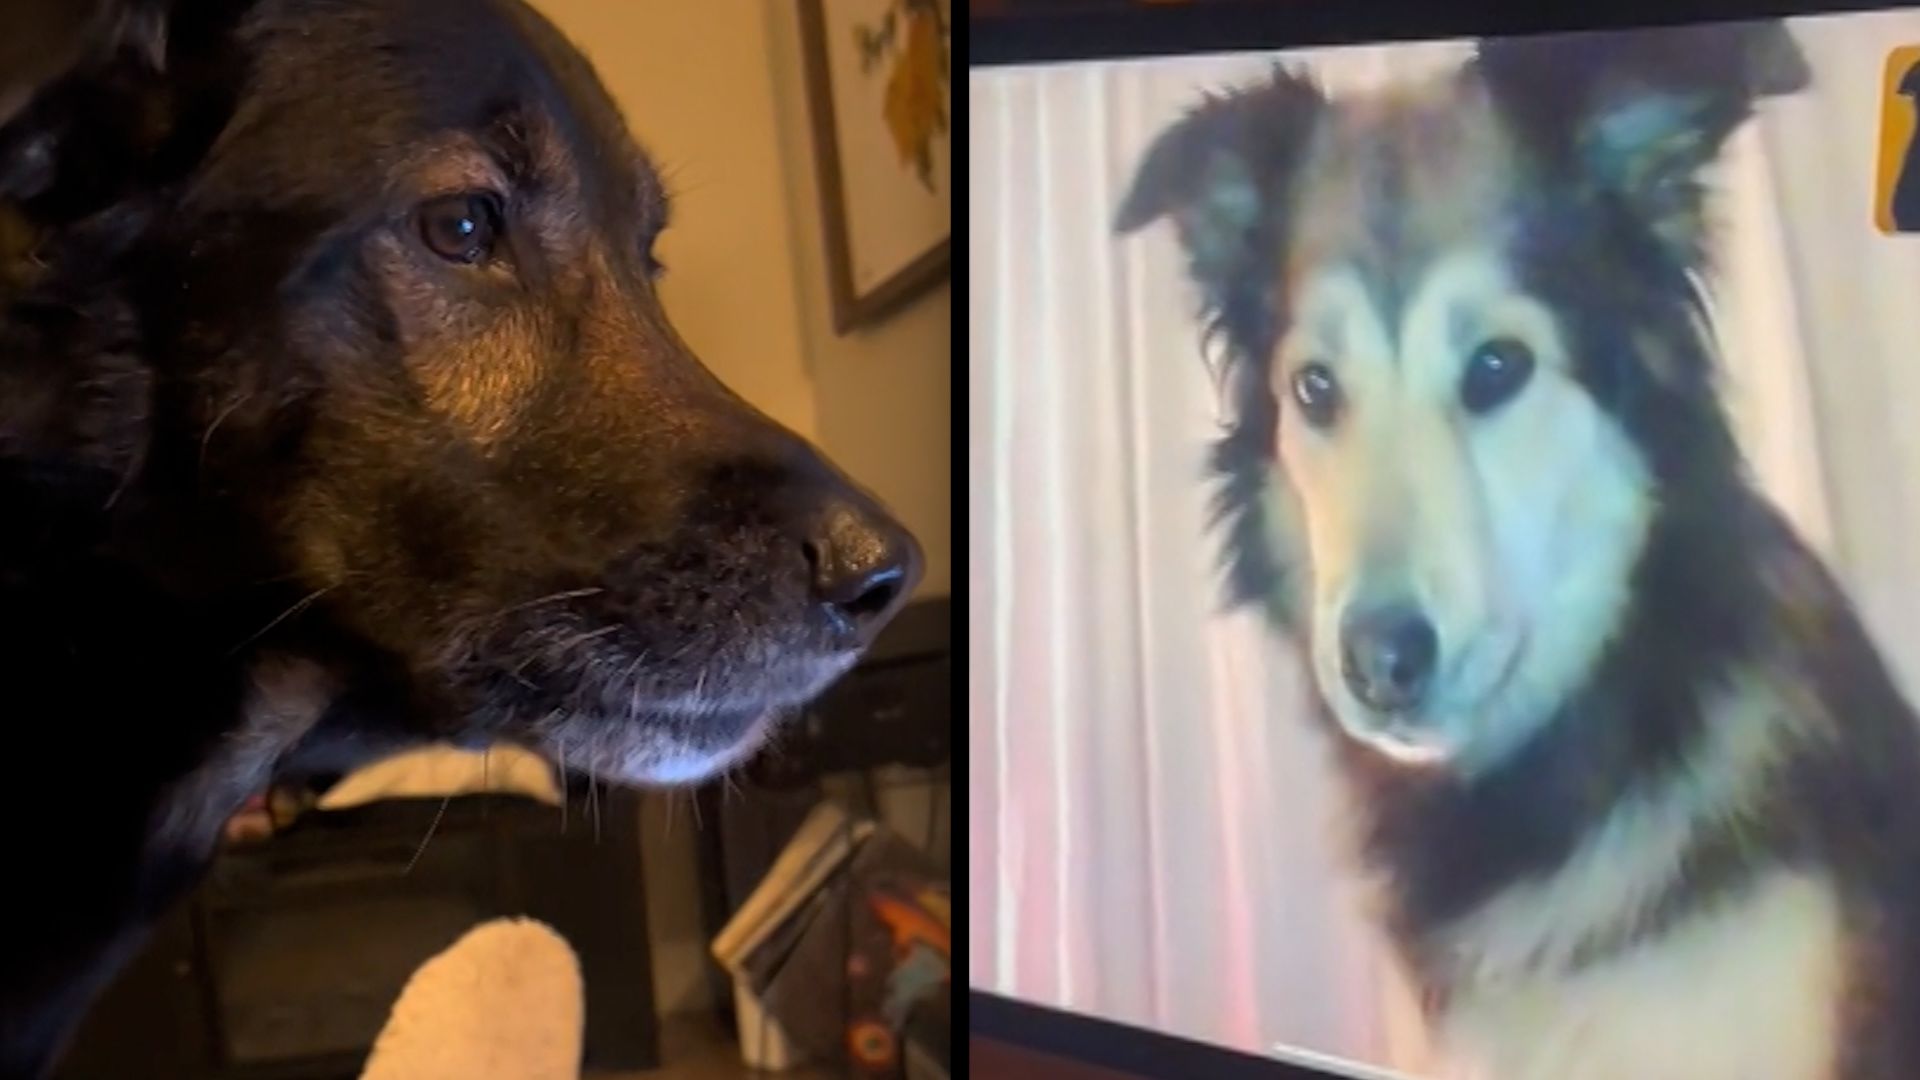 Dog Share Ka Bf Xxx - Dog spots friend on video call. His response went viral | CNN